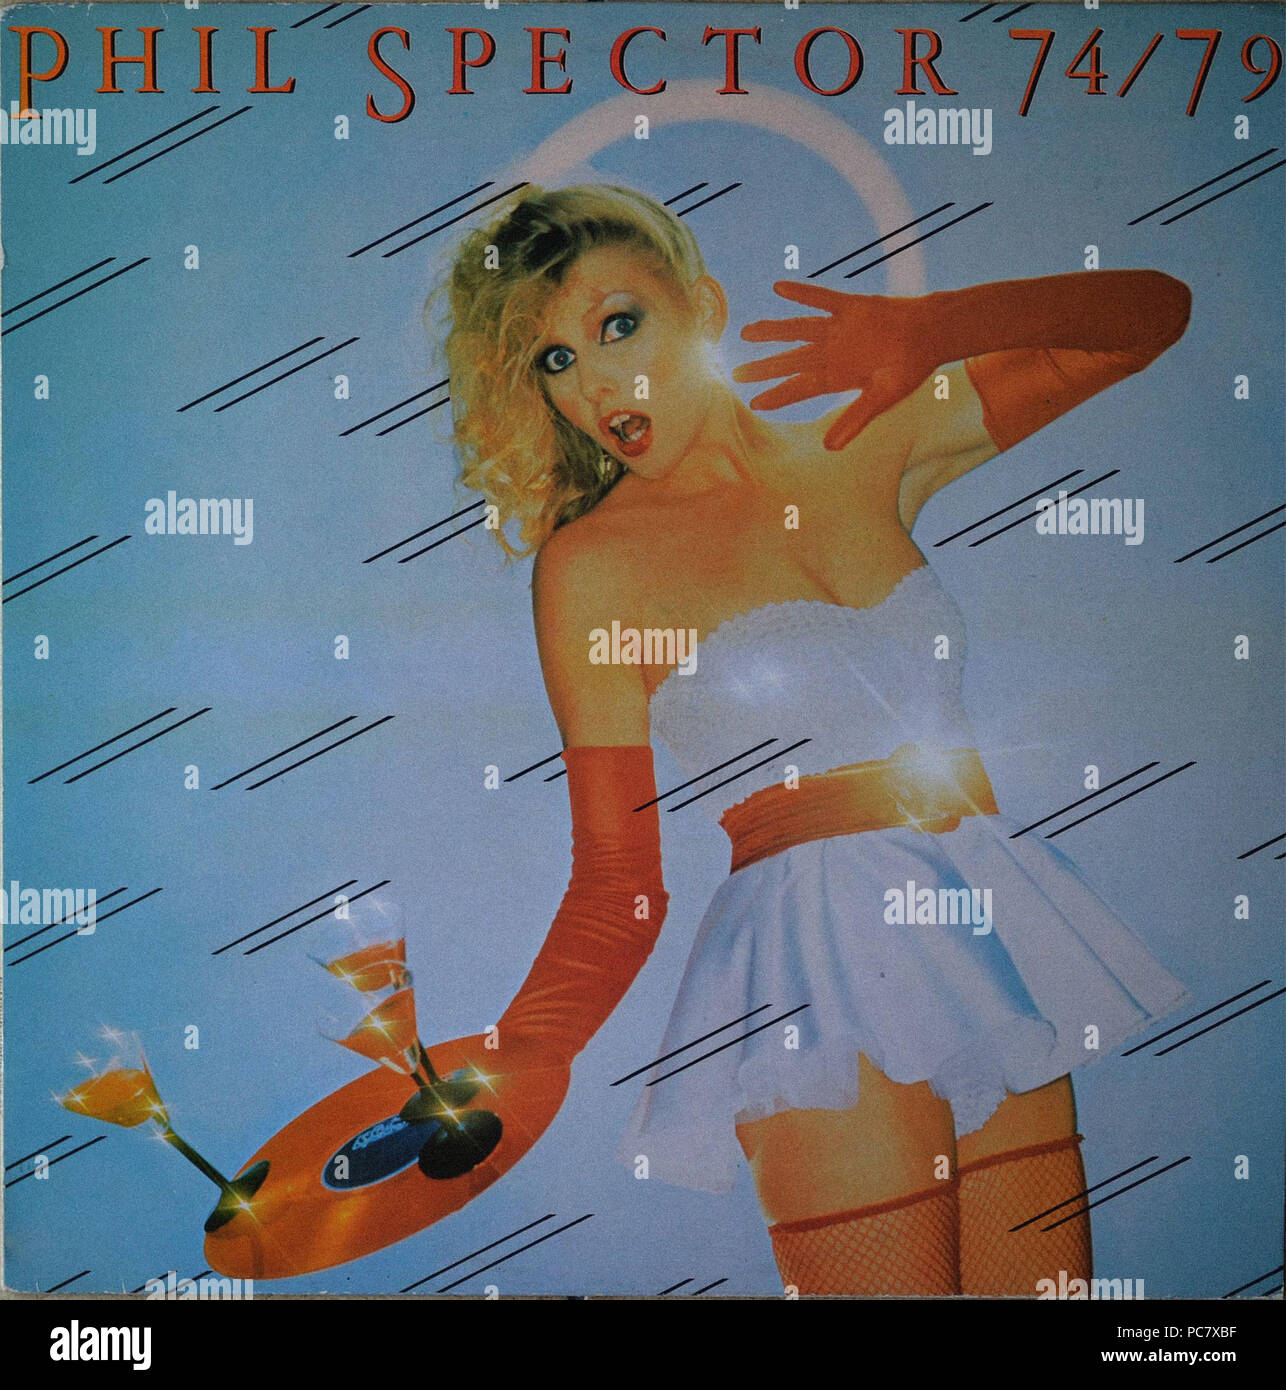 Verschiedene Künstler - Phil Spector 74--79 - Vintage Vinyl Album Cover Stockfoto